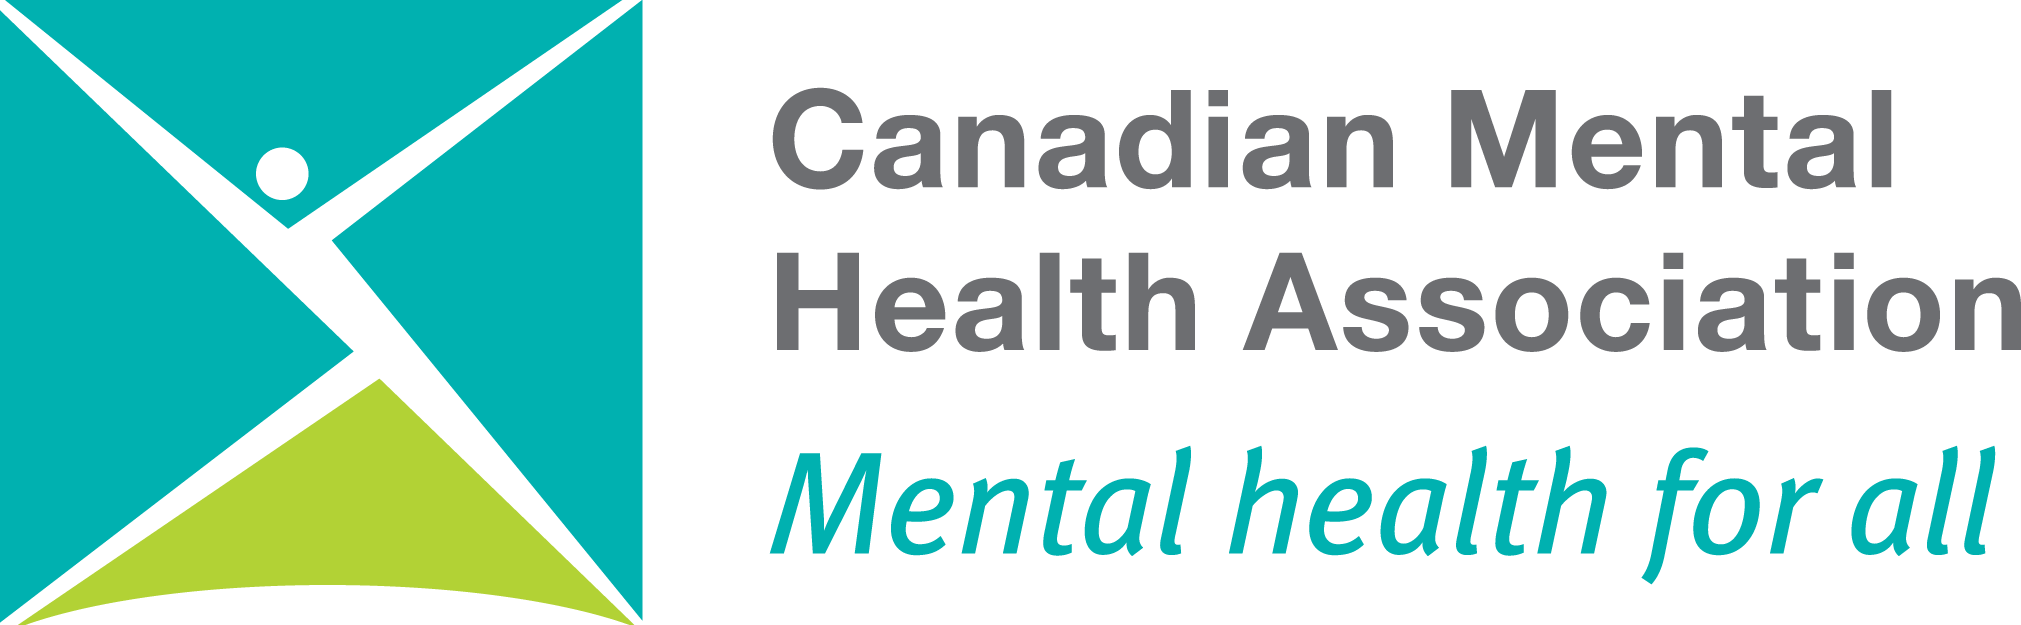 Canadian_Mental_Health_Association_logo